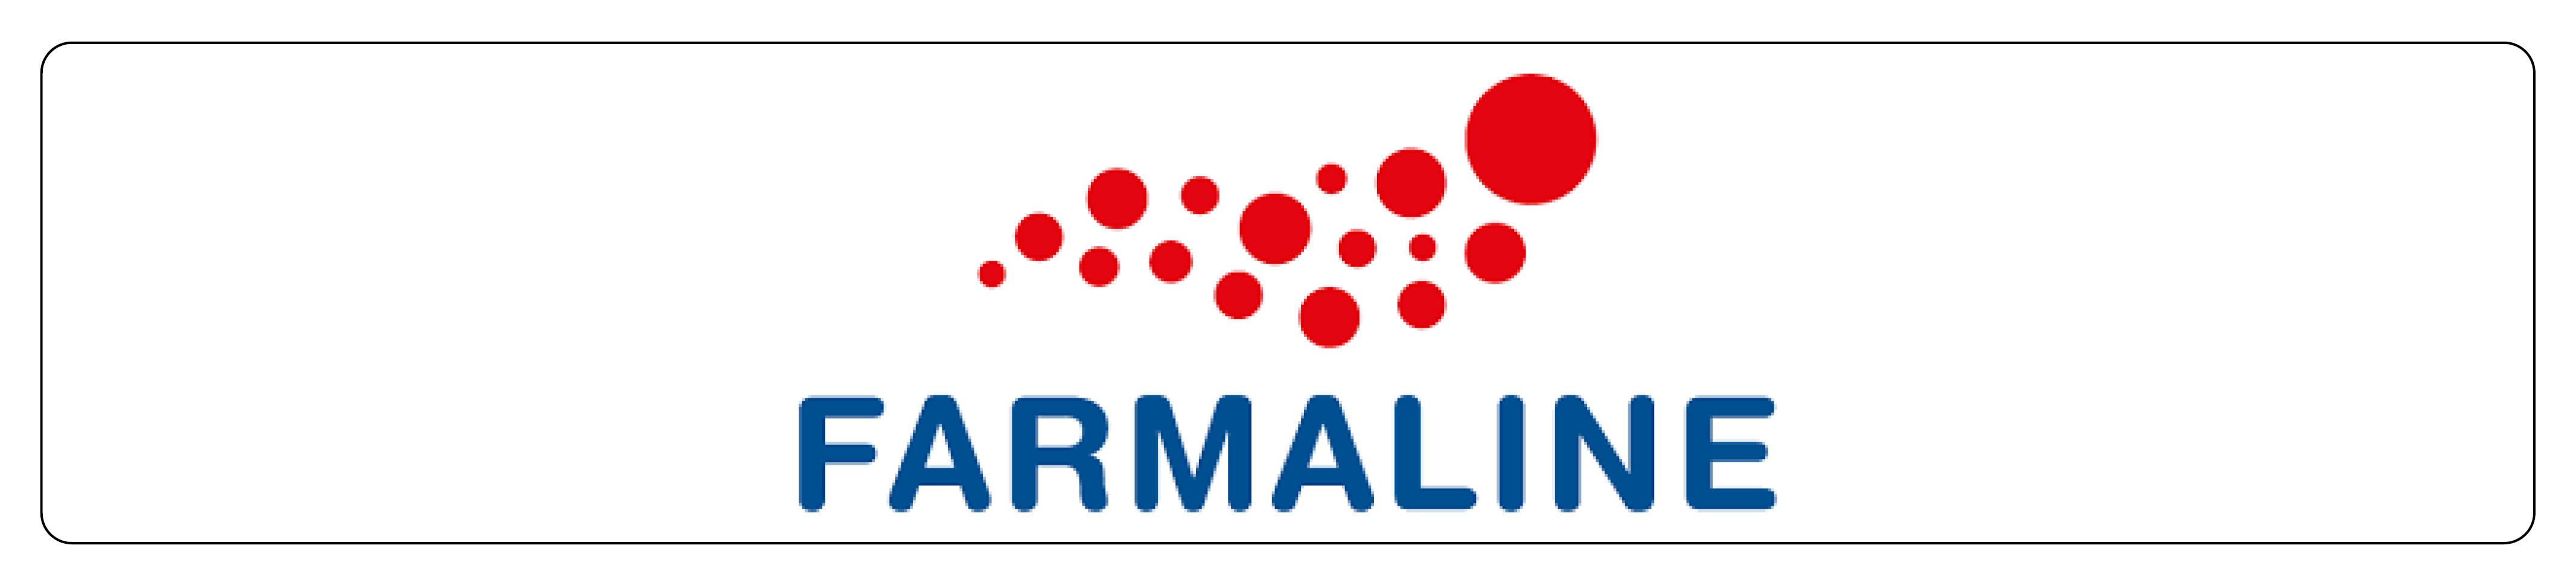 logo Farmaline - Qalm